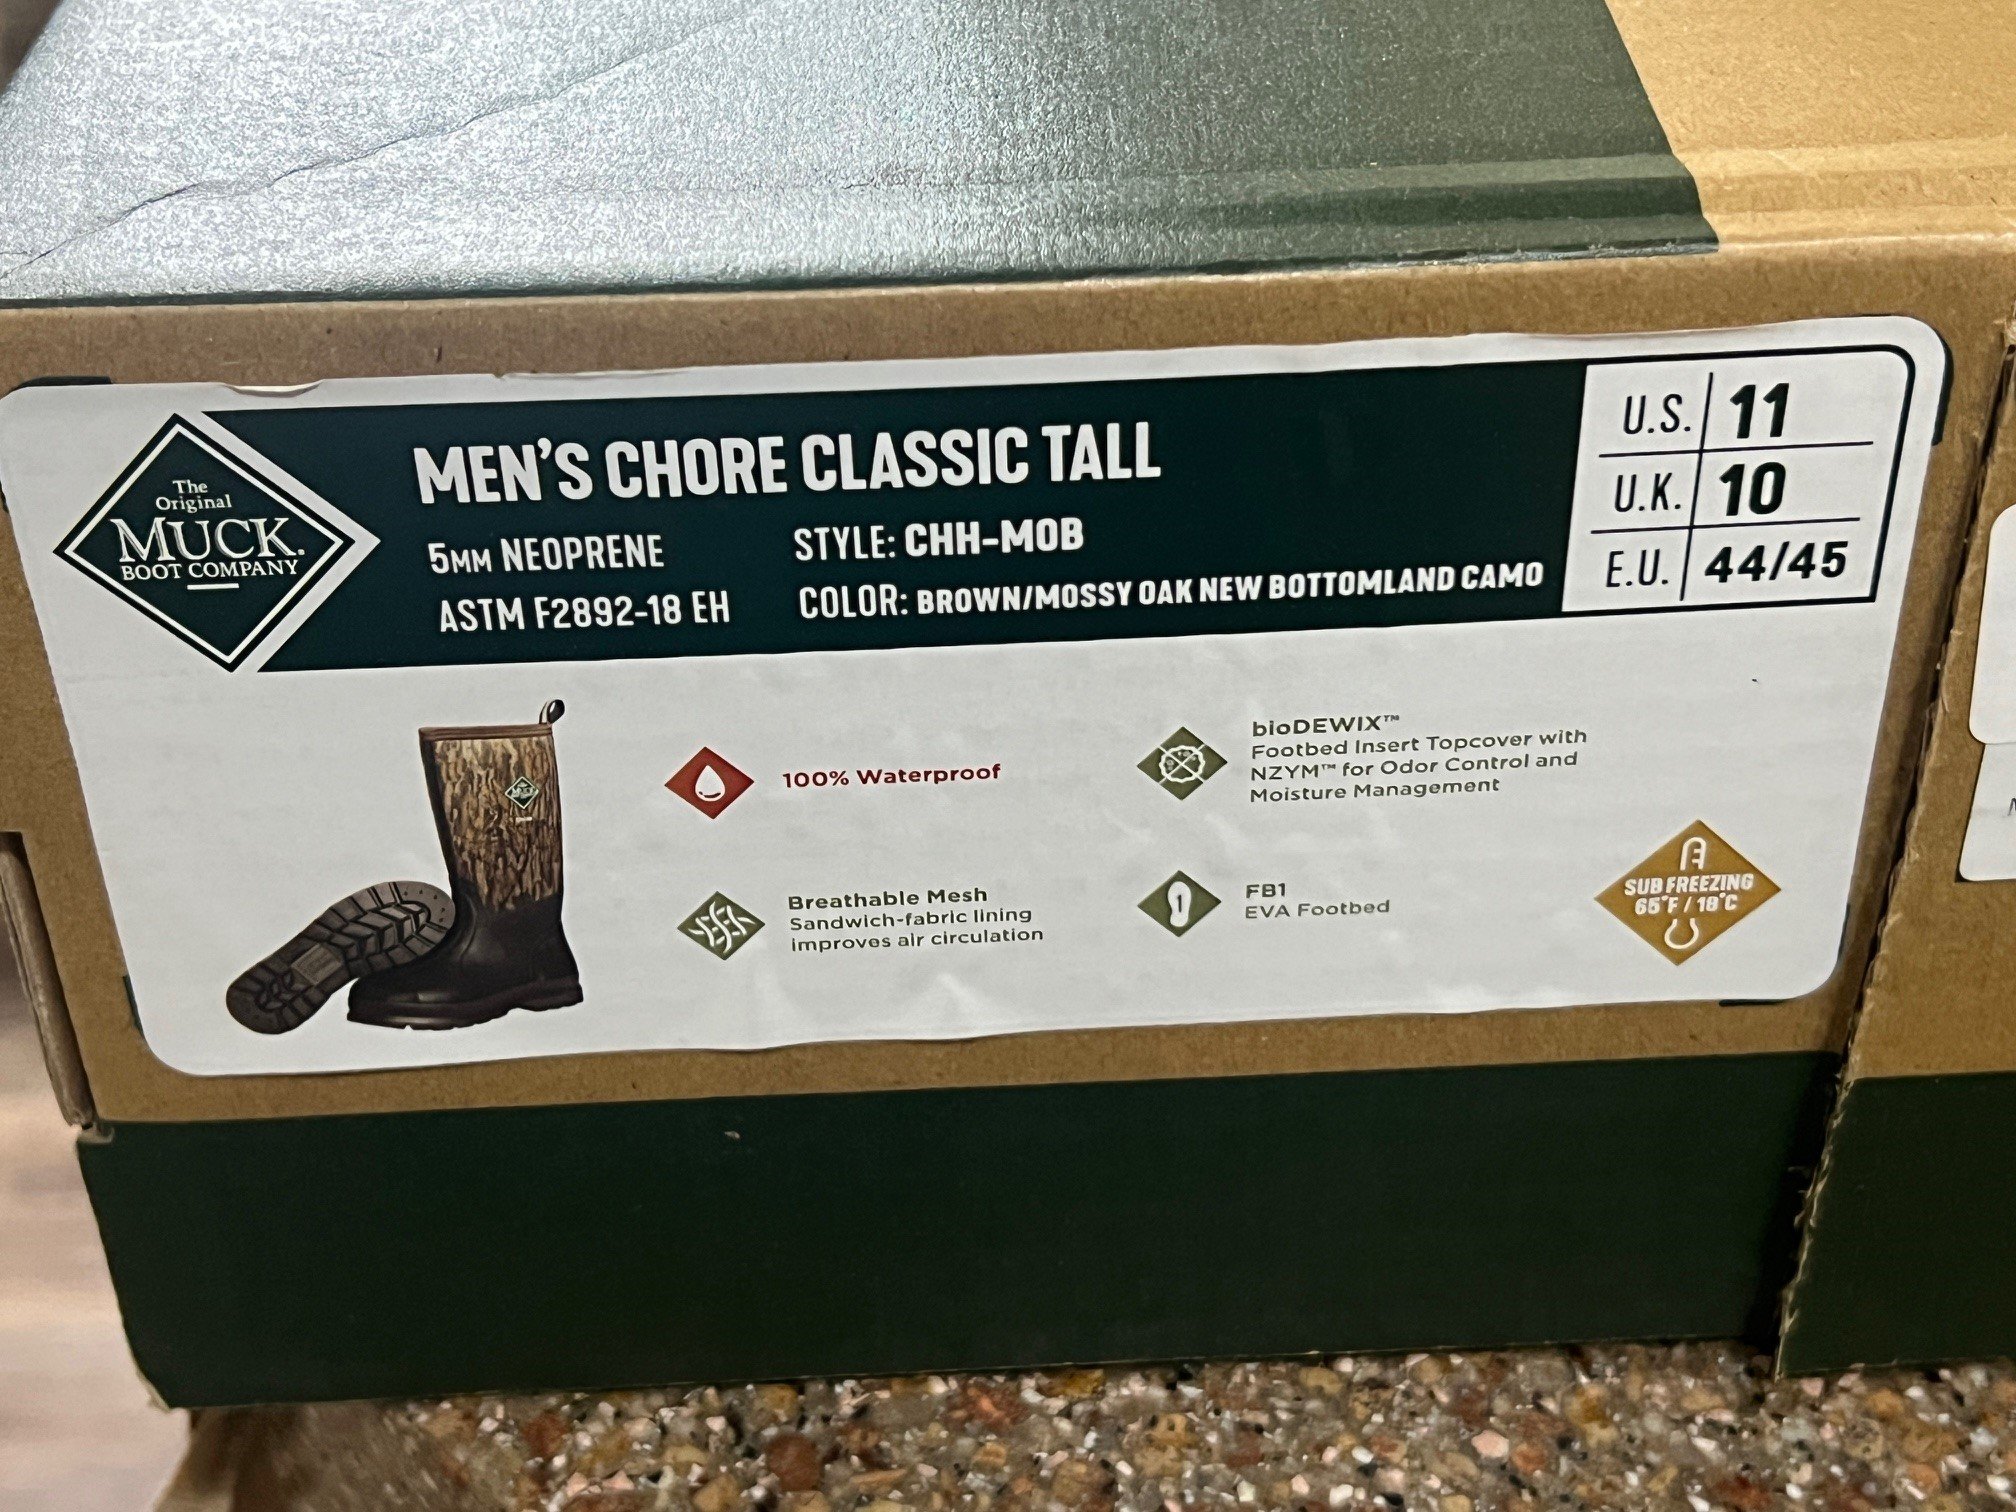 WTS - Muck Boots Chore Mossy Oak size 11 - Classified Ads ...